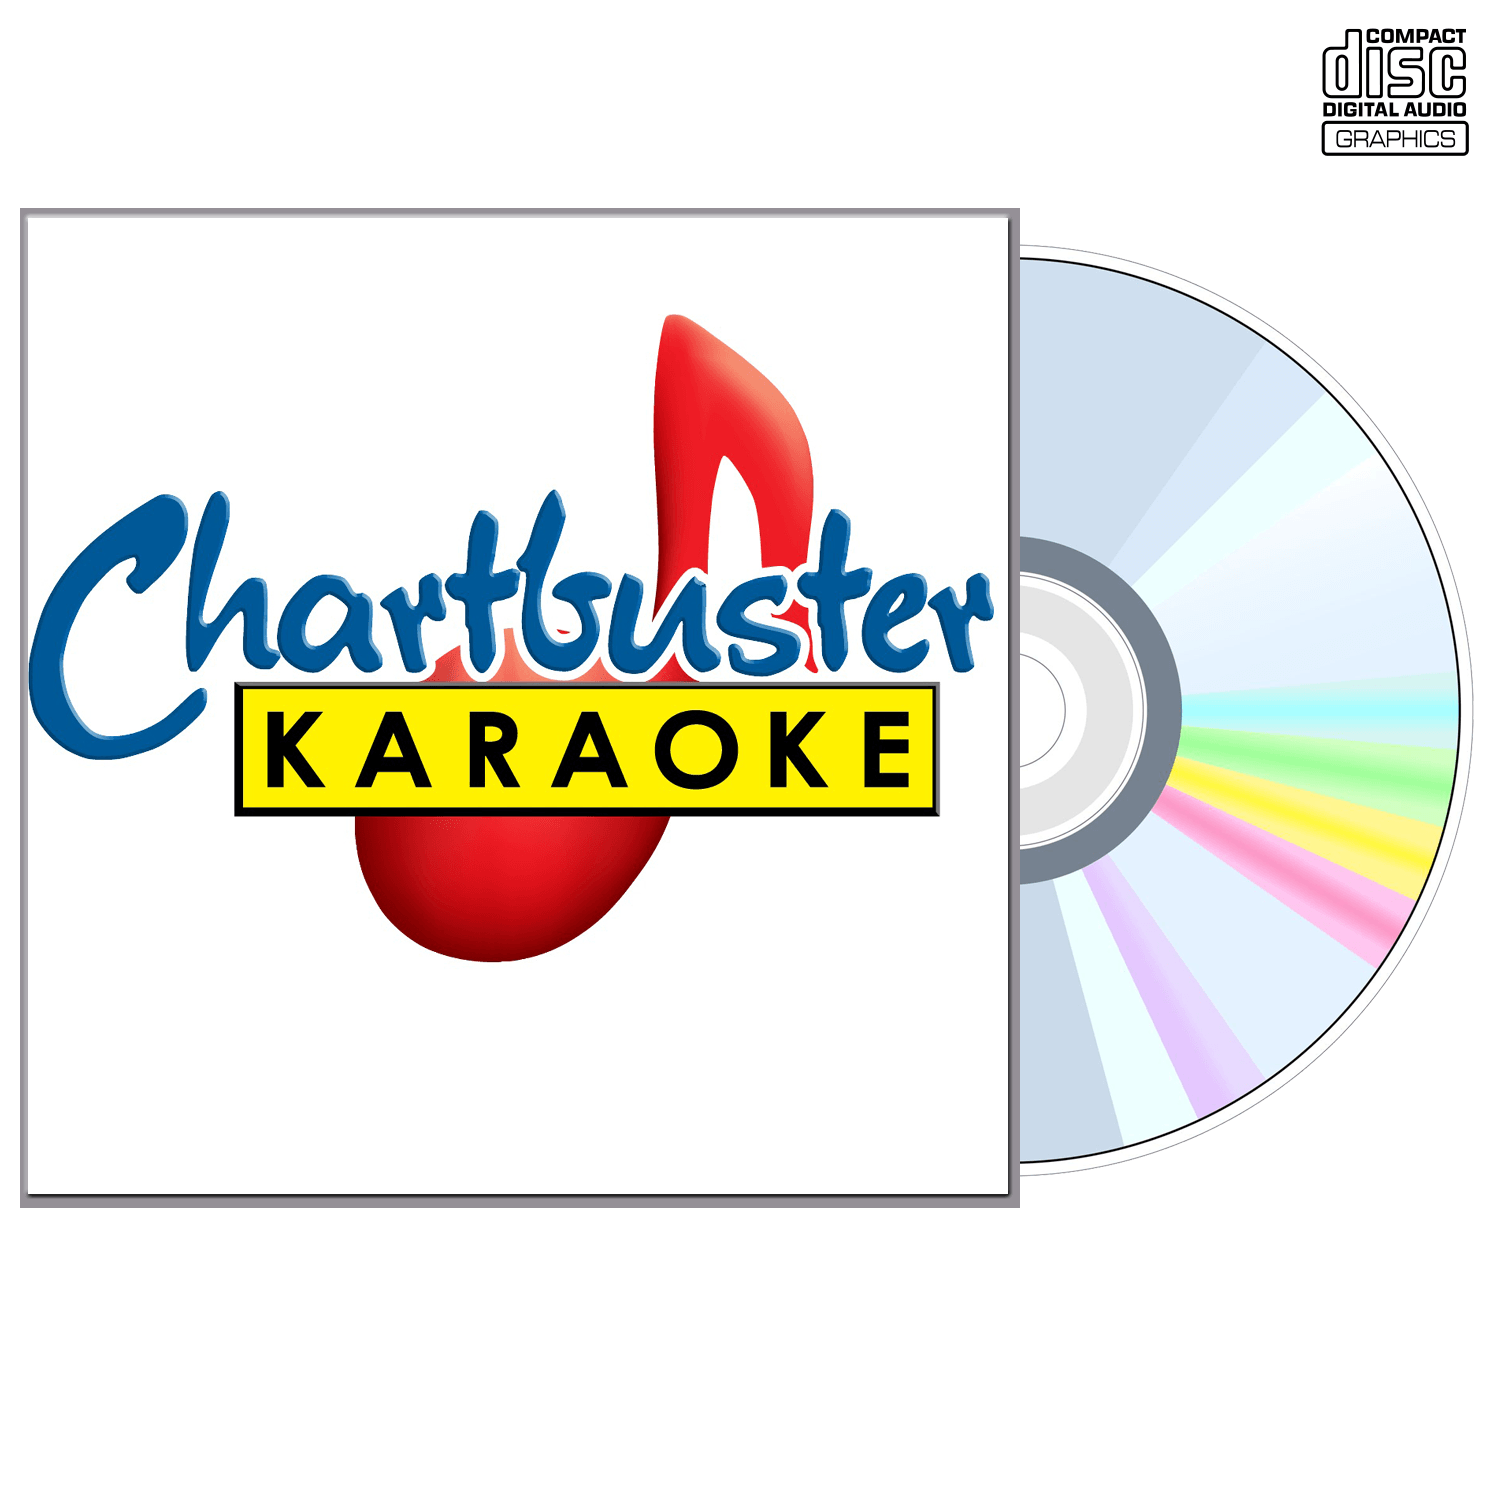 Josh Gracin - CD+G - Chartbuster Karaoke - Karaoke Home Entertainment